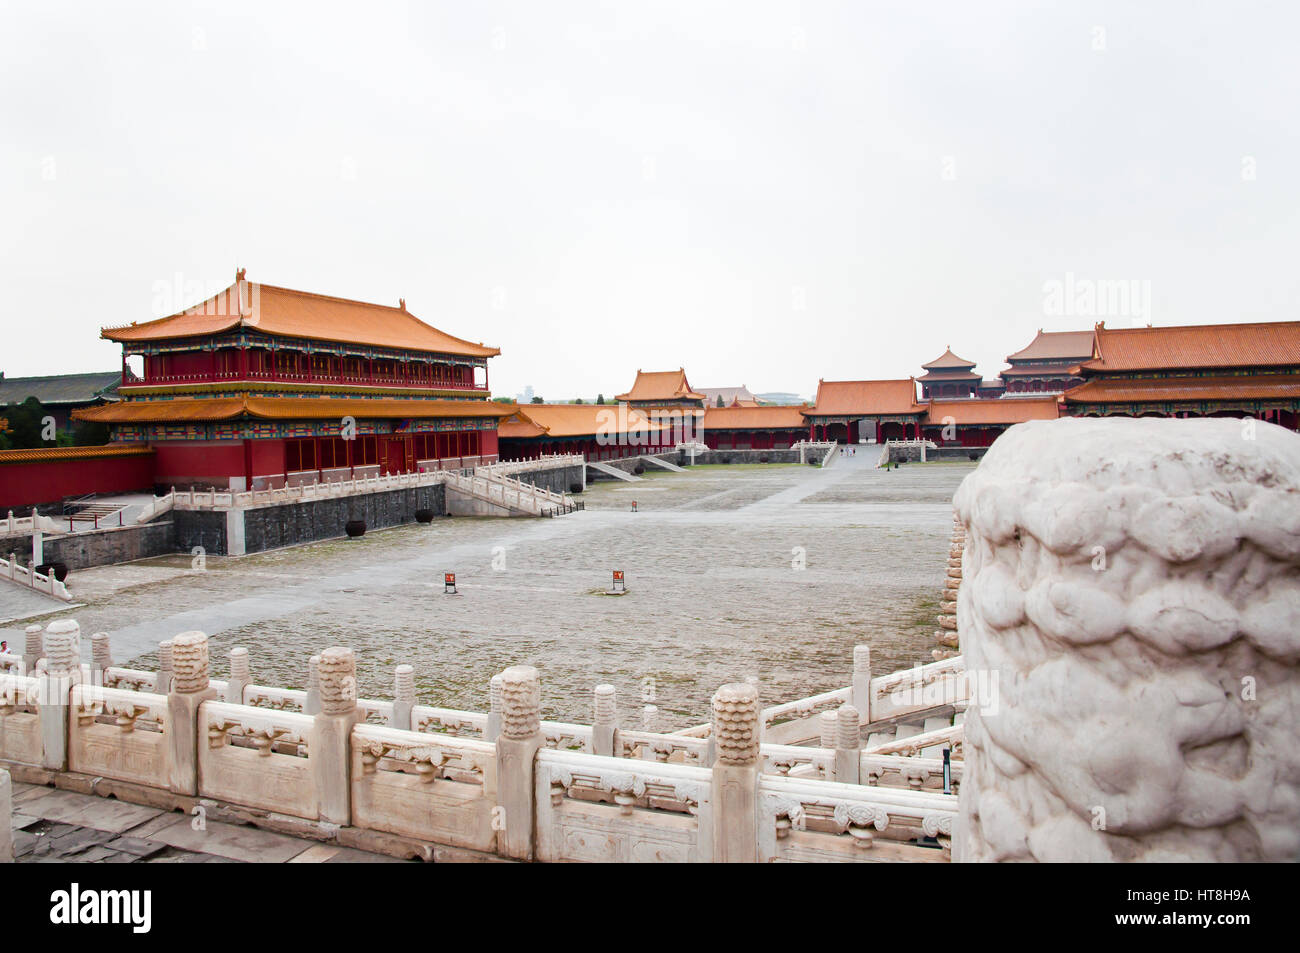 Forbidden City - Beijing - China Stock Photo